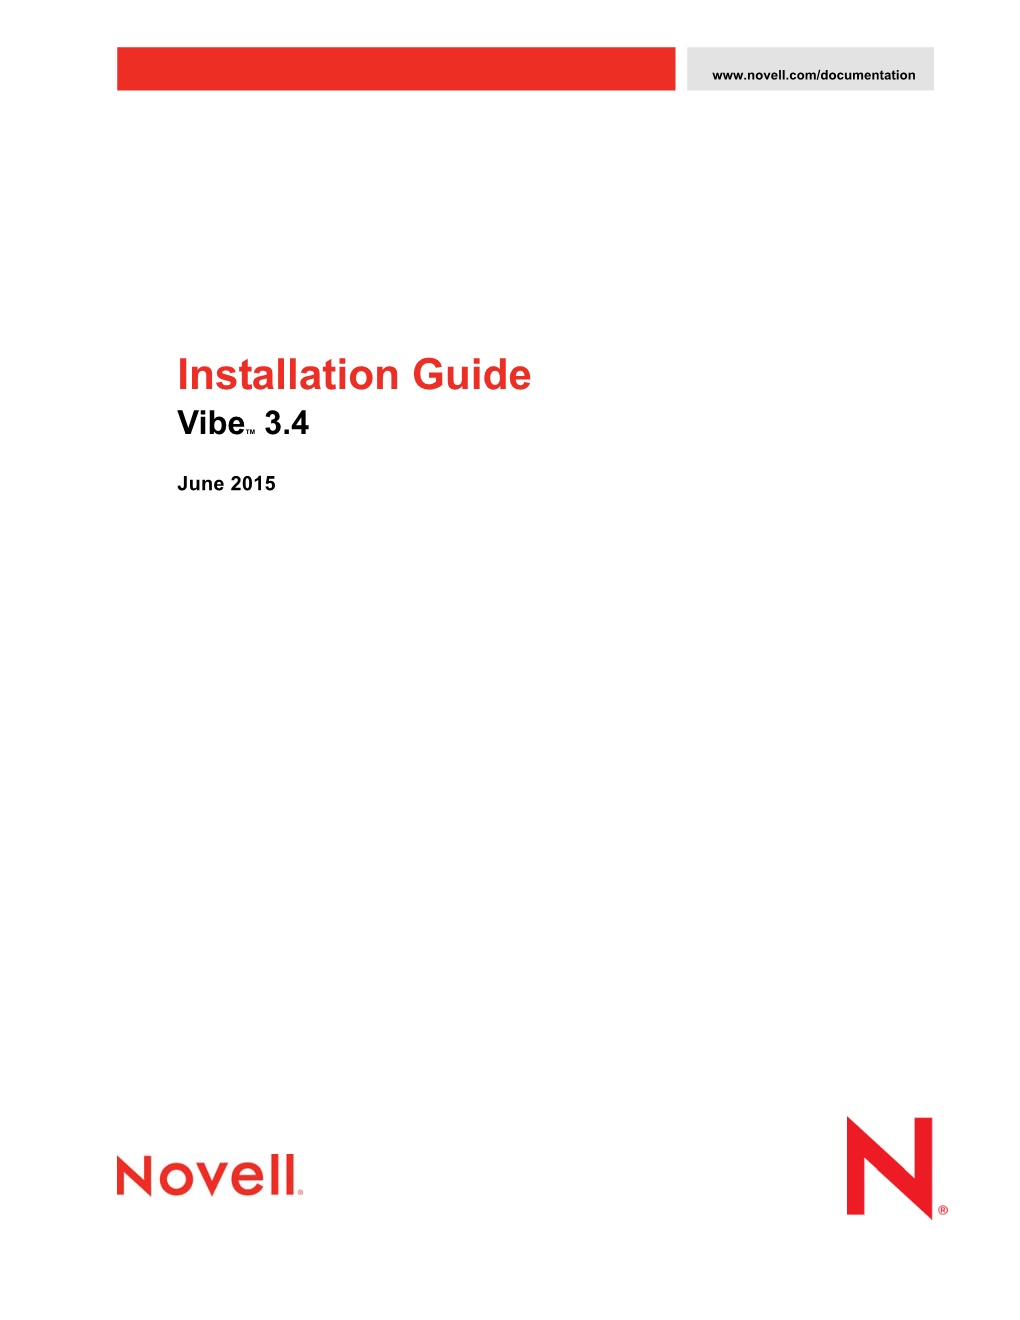 Novell Vibe 3.4 Installation Guide 4.2.1 Performing Pre-Installation Tasks on Windows